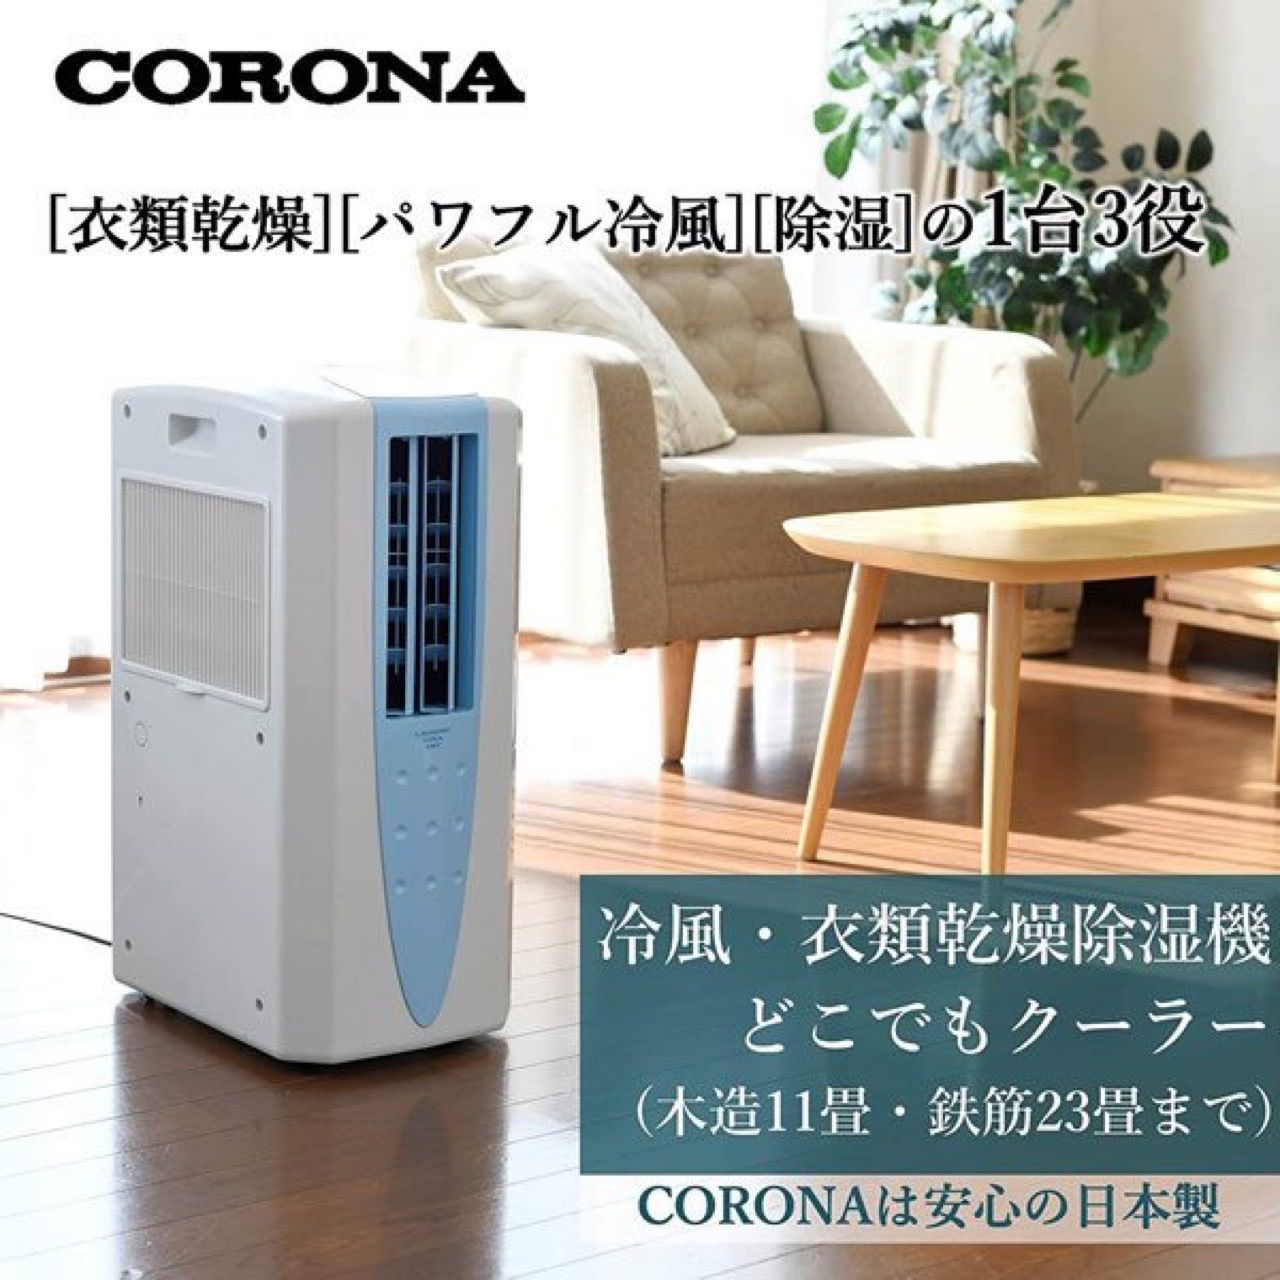 CORONA CDM-1421(W) WHITE - 4